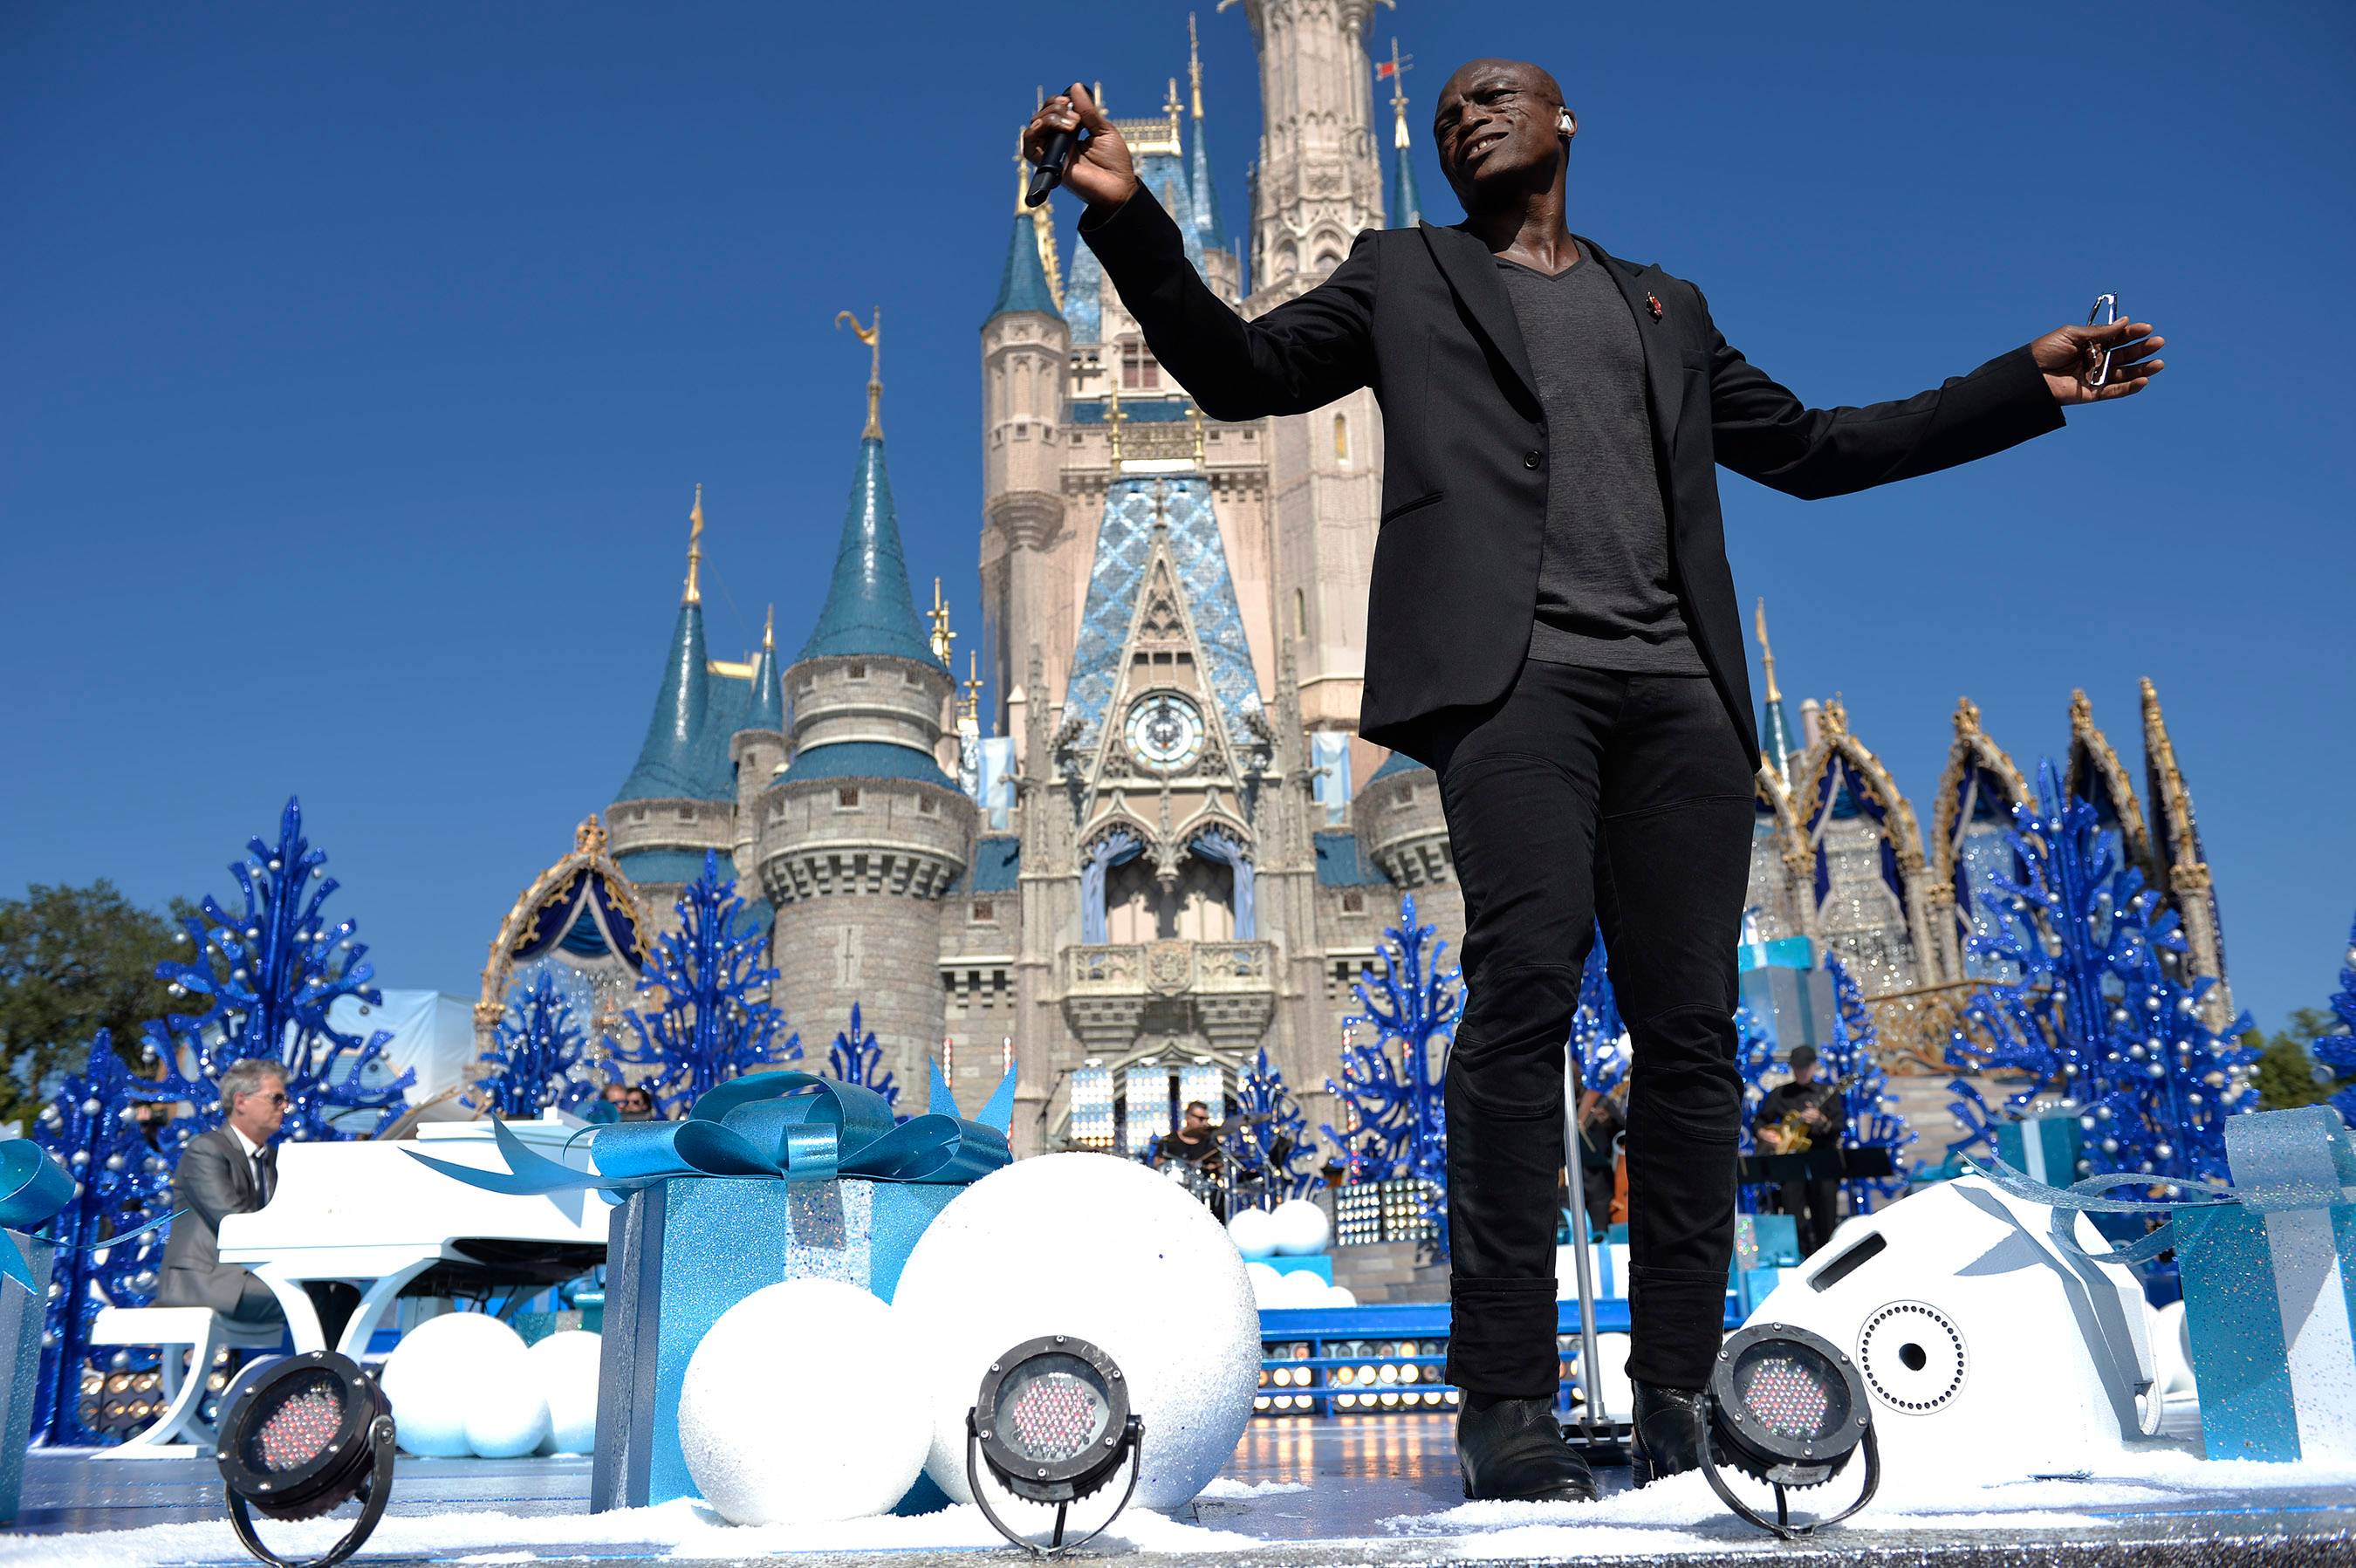 Disney Parks Unforgettable Christmas Celebration performance - Seal